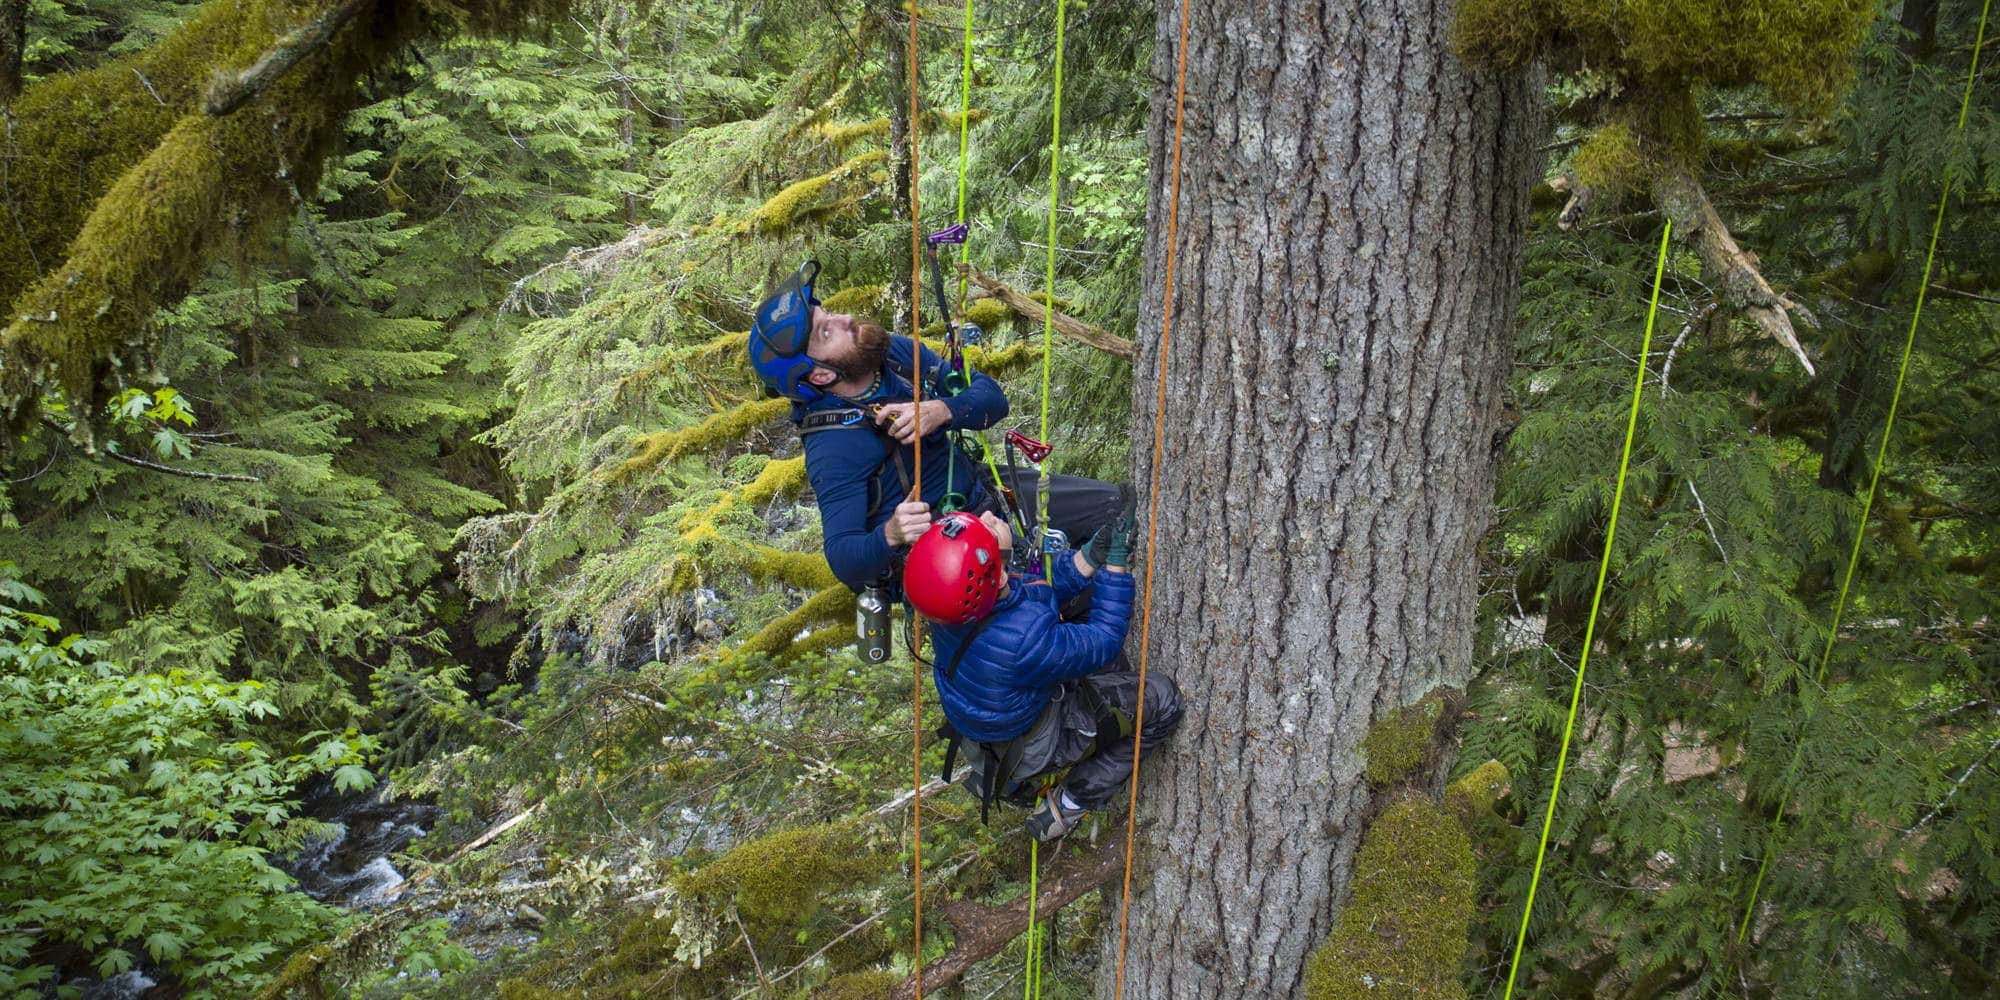 Boy and guide climb Douglas fir tree